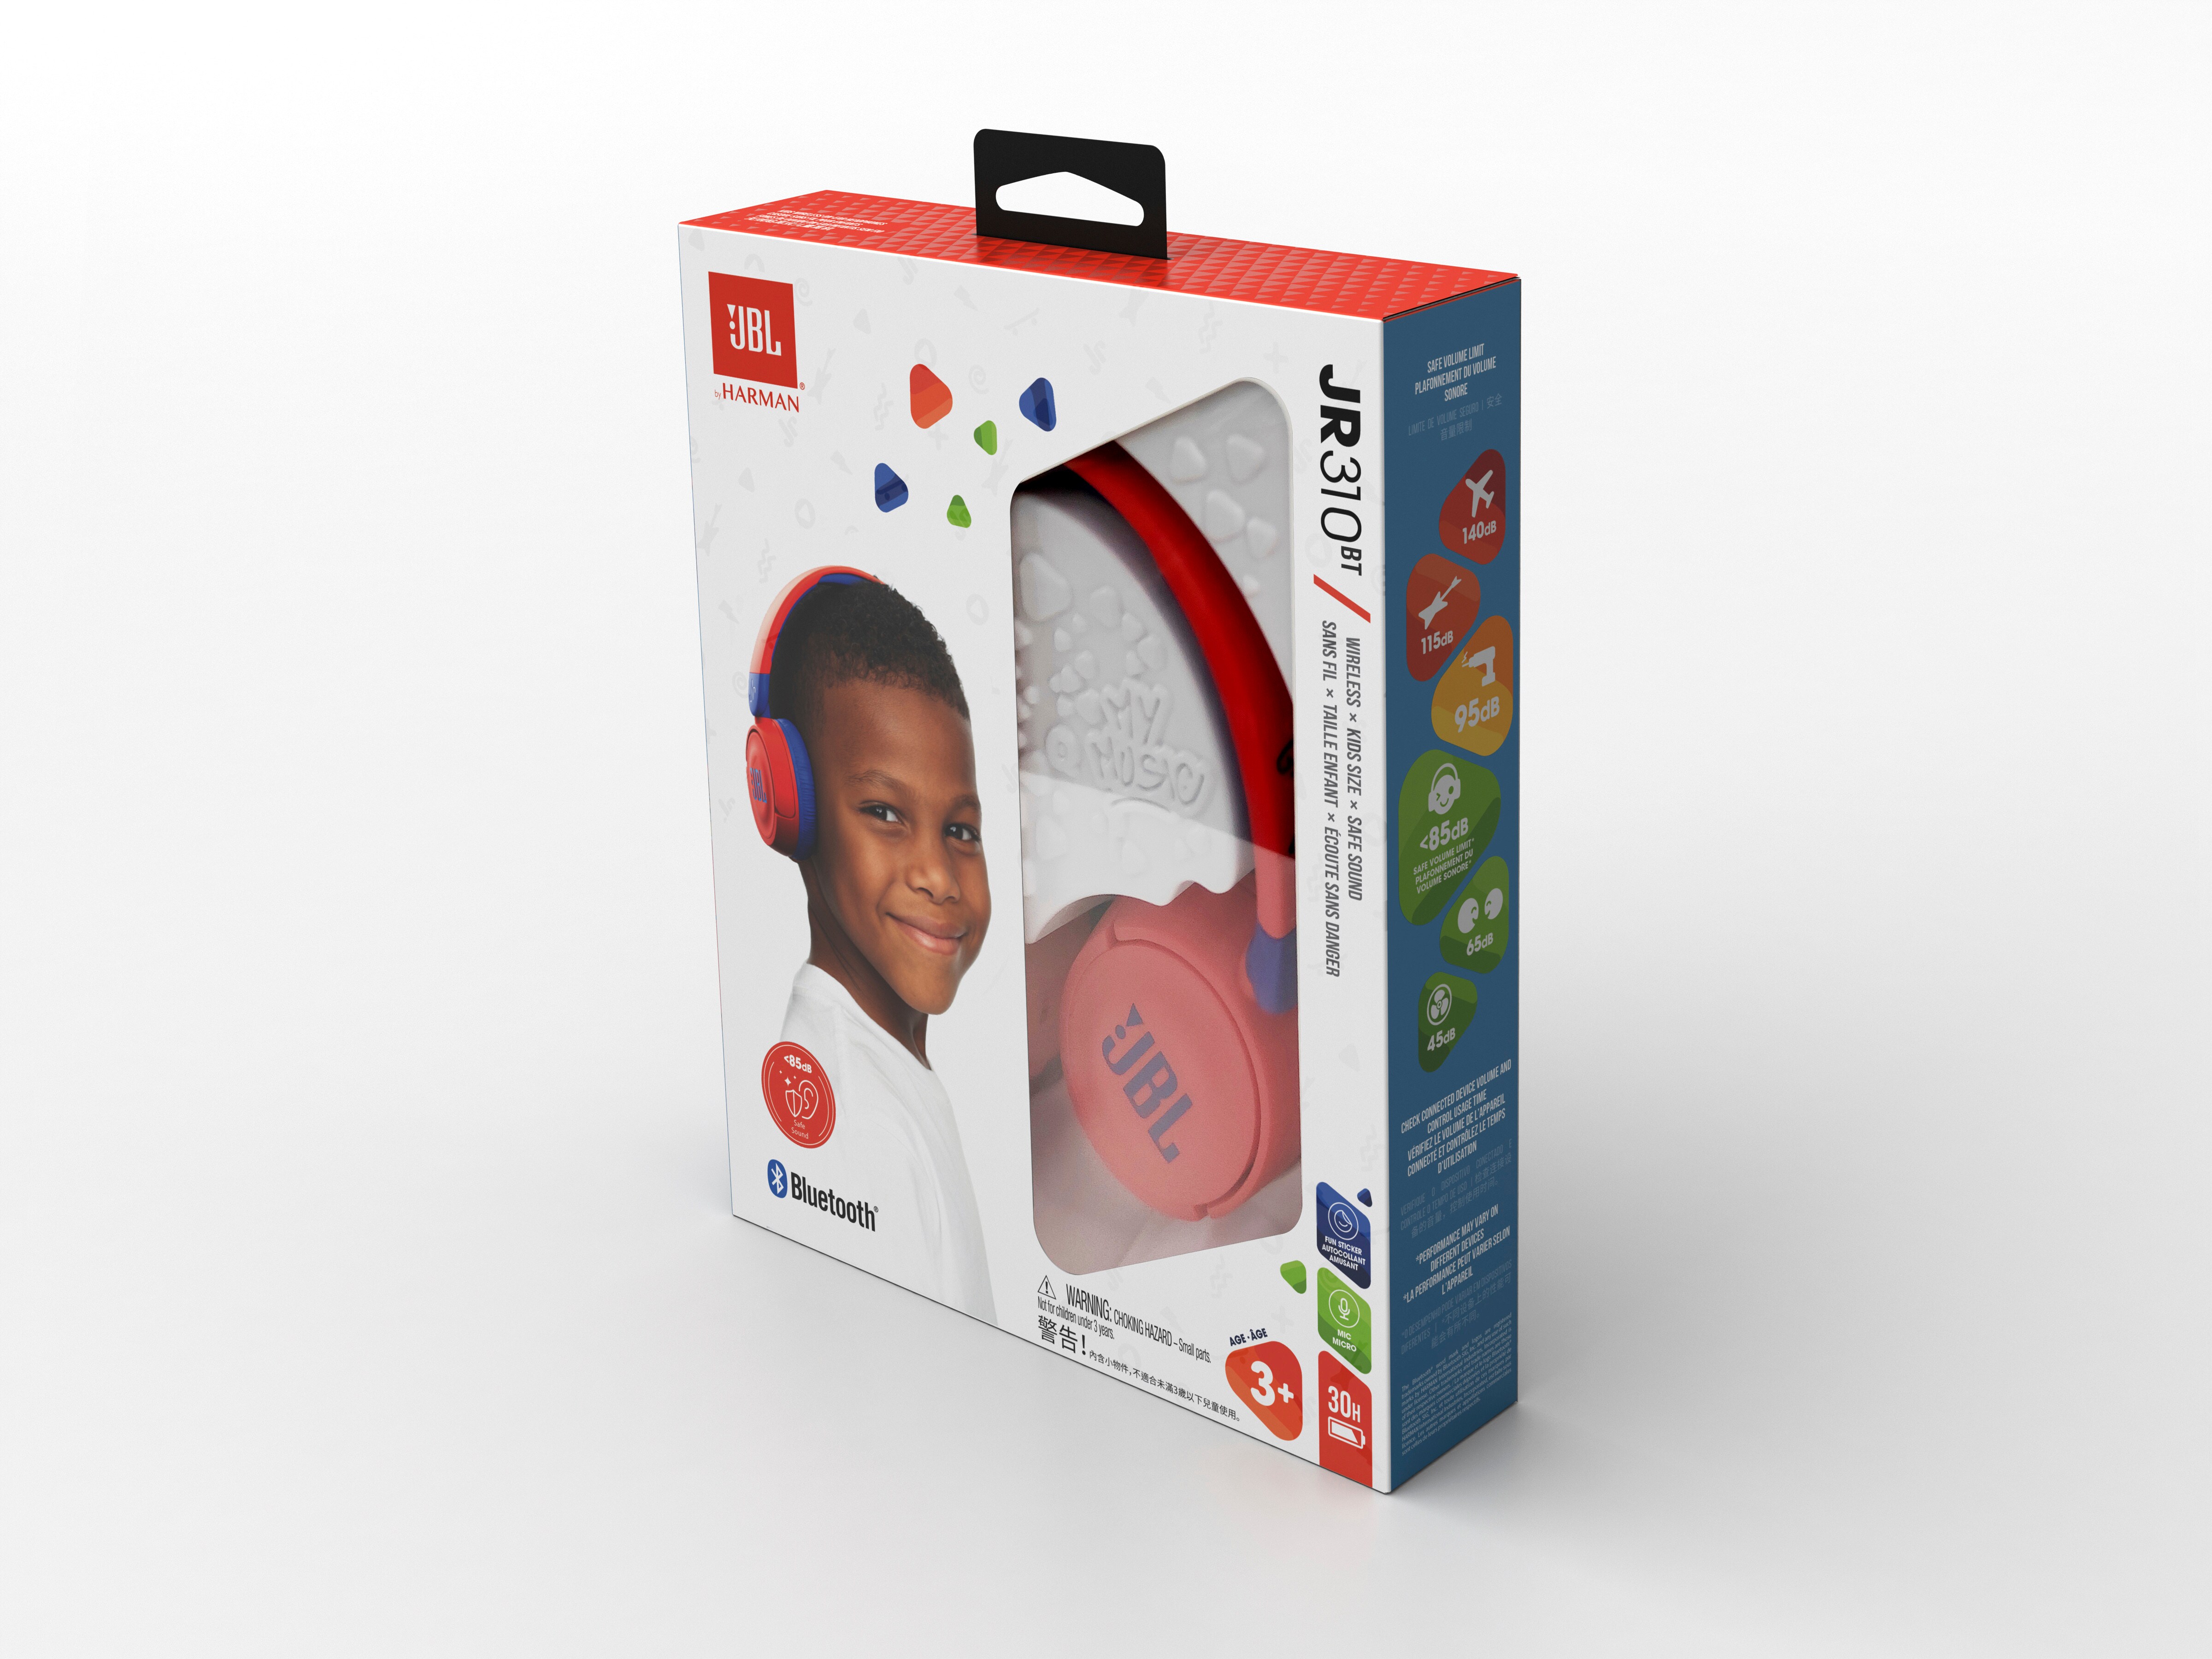 [Sonderpreis für begrenzte Menge] JBL JR310BT blau/rot Kopfhörer Kinder - ++ On Cyberport Ear-Bluetooth für